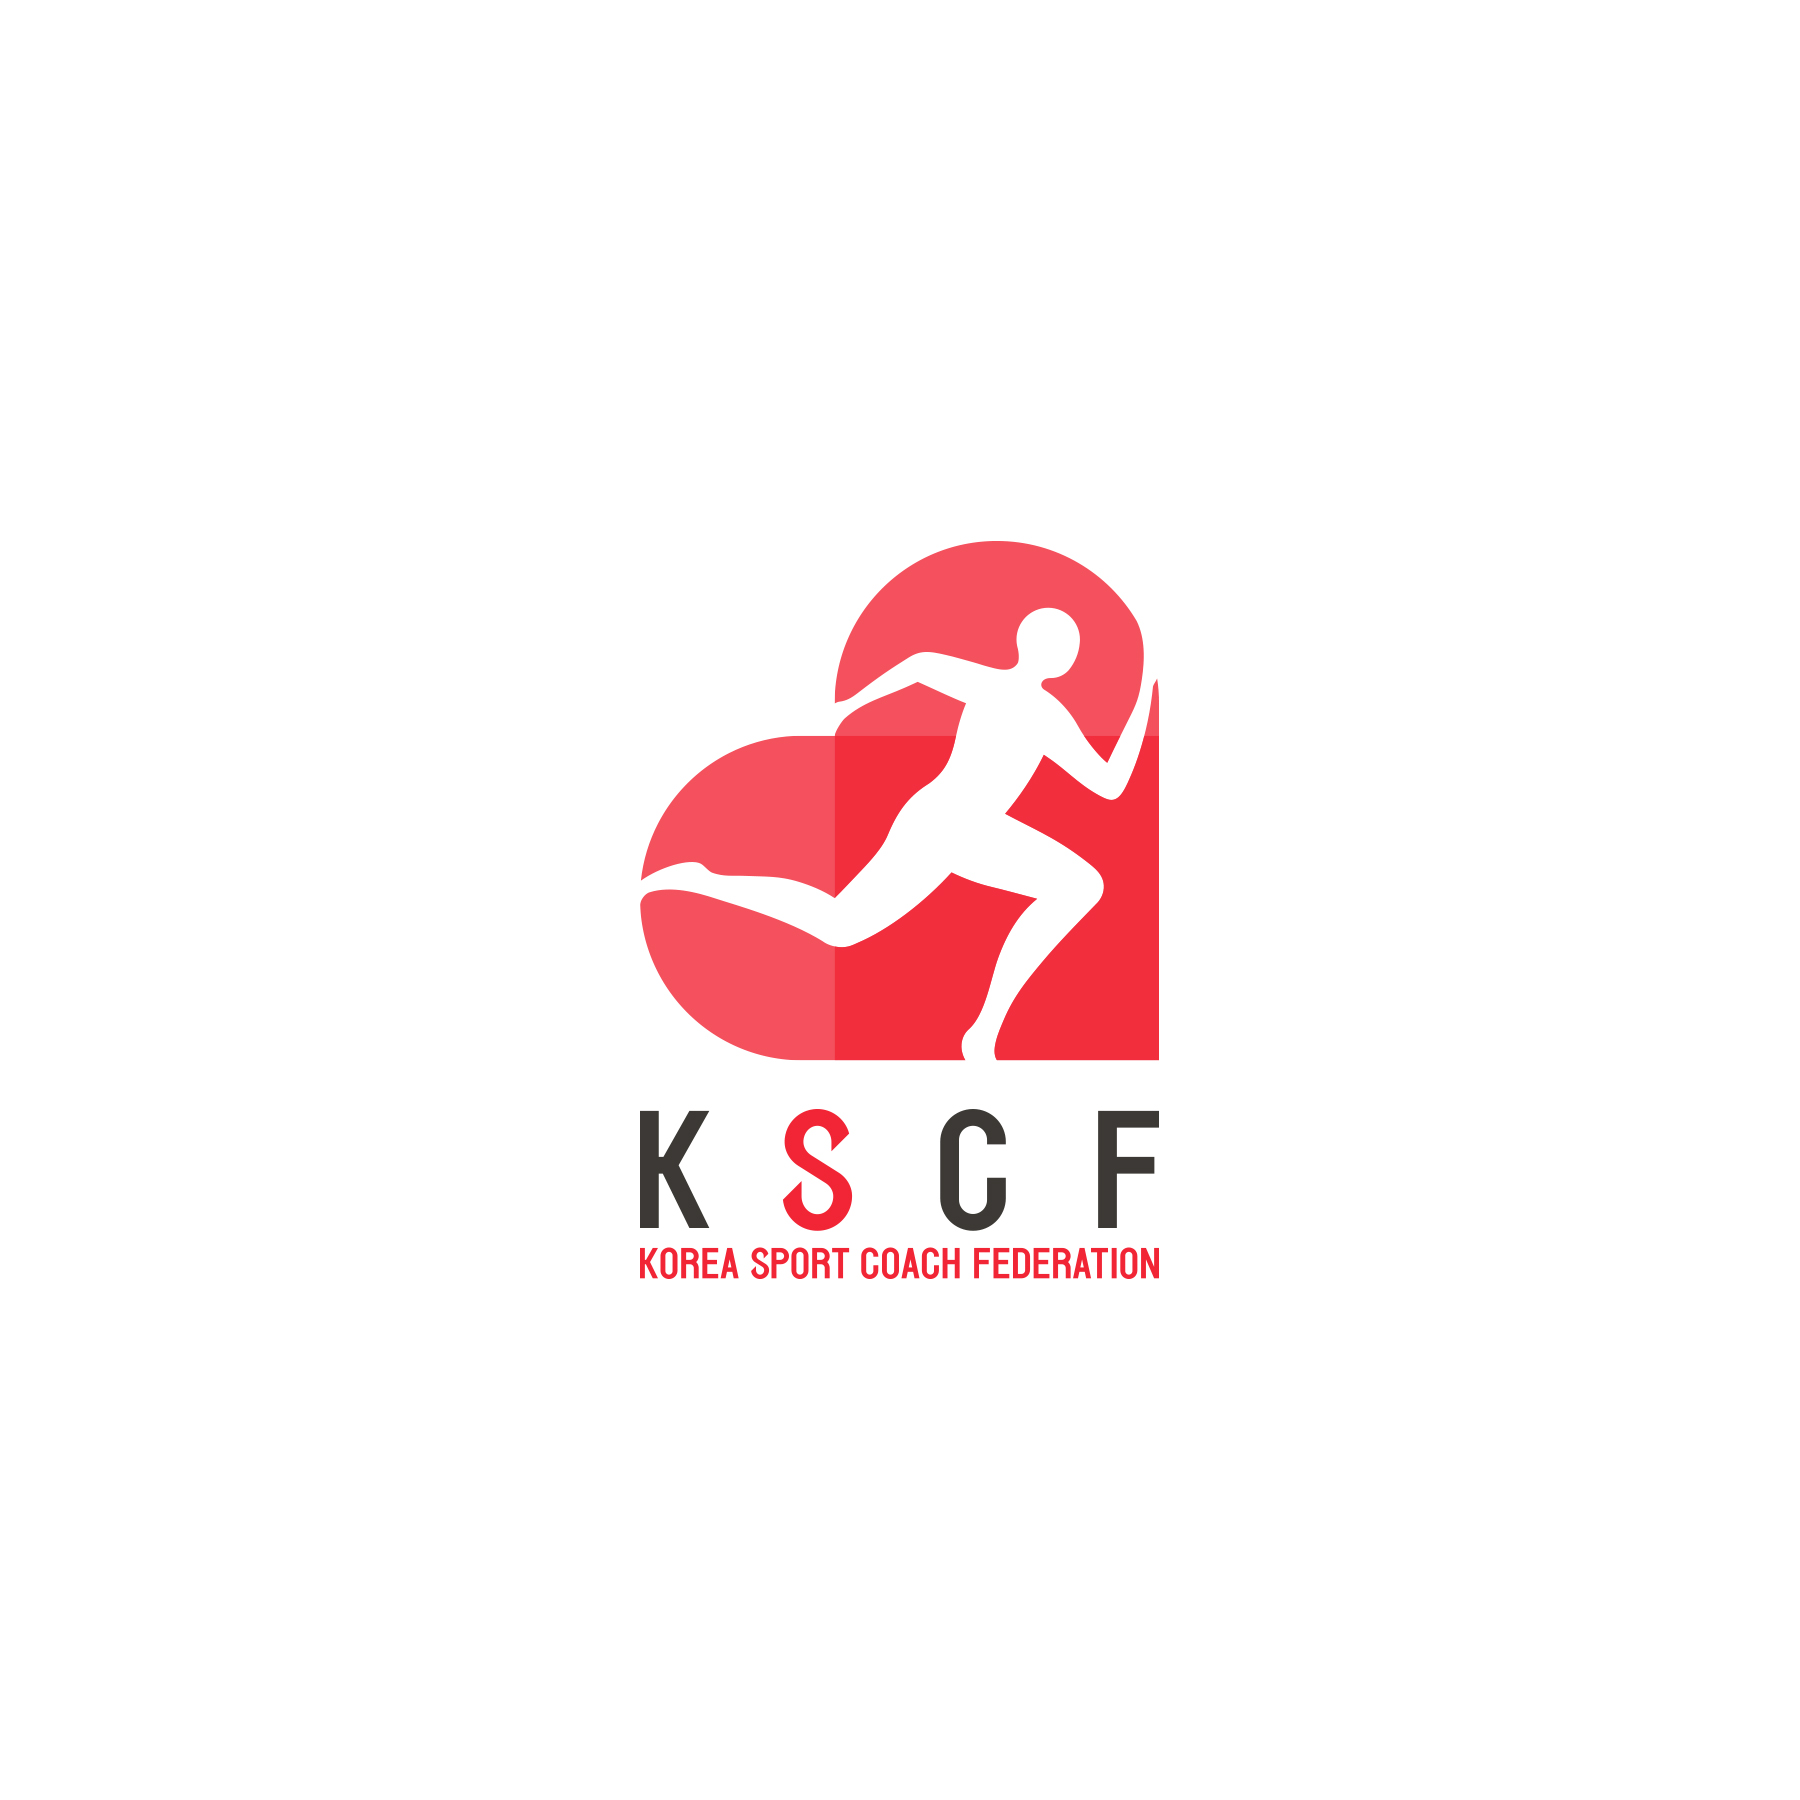 Korea Sport Coach Federation Branding and Visual Identity